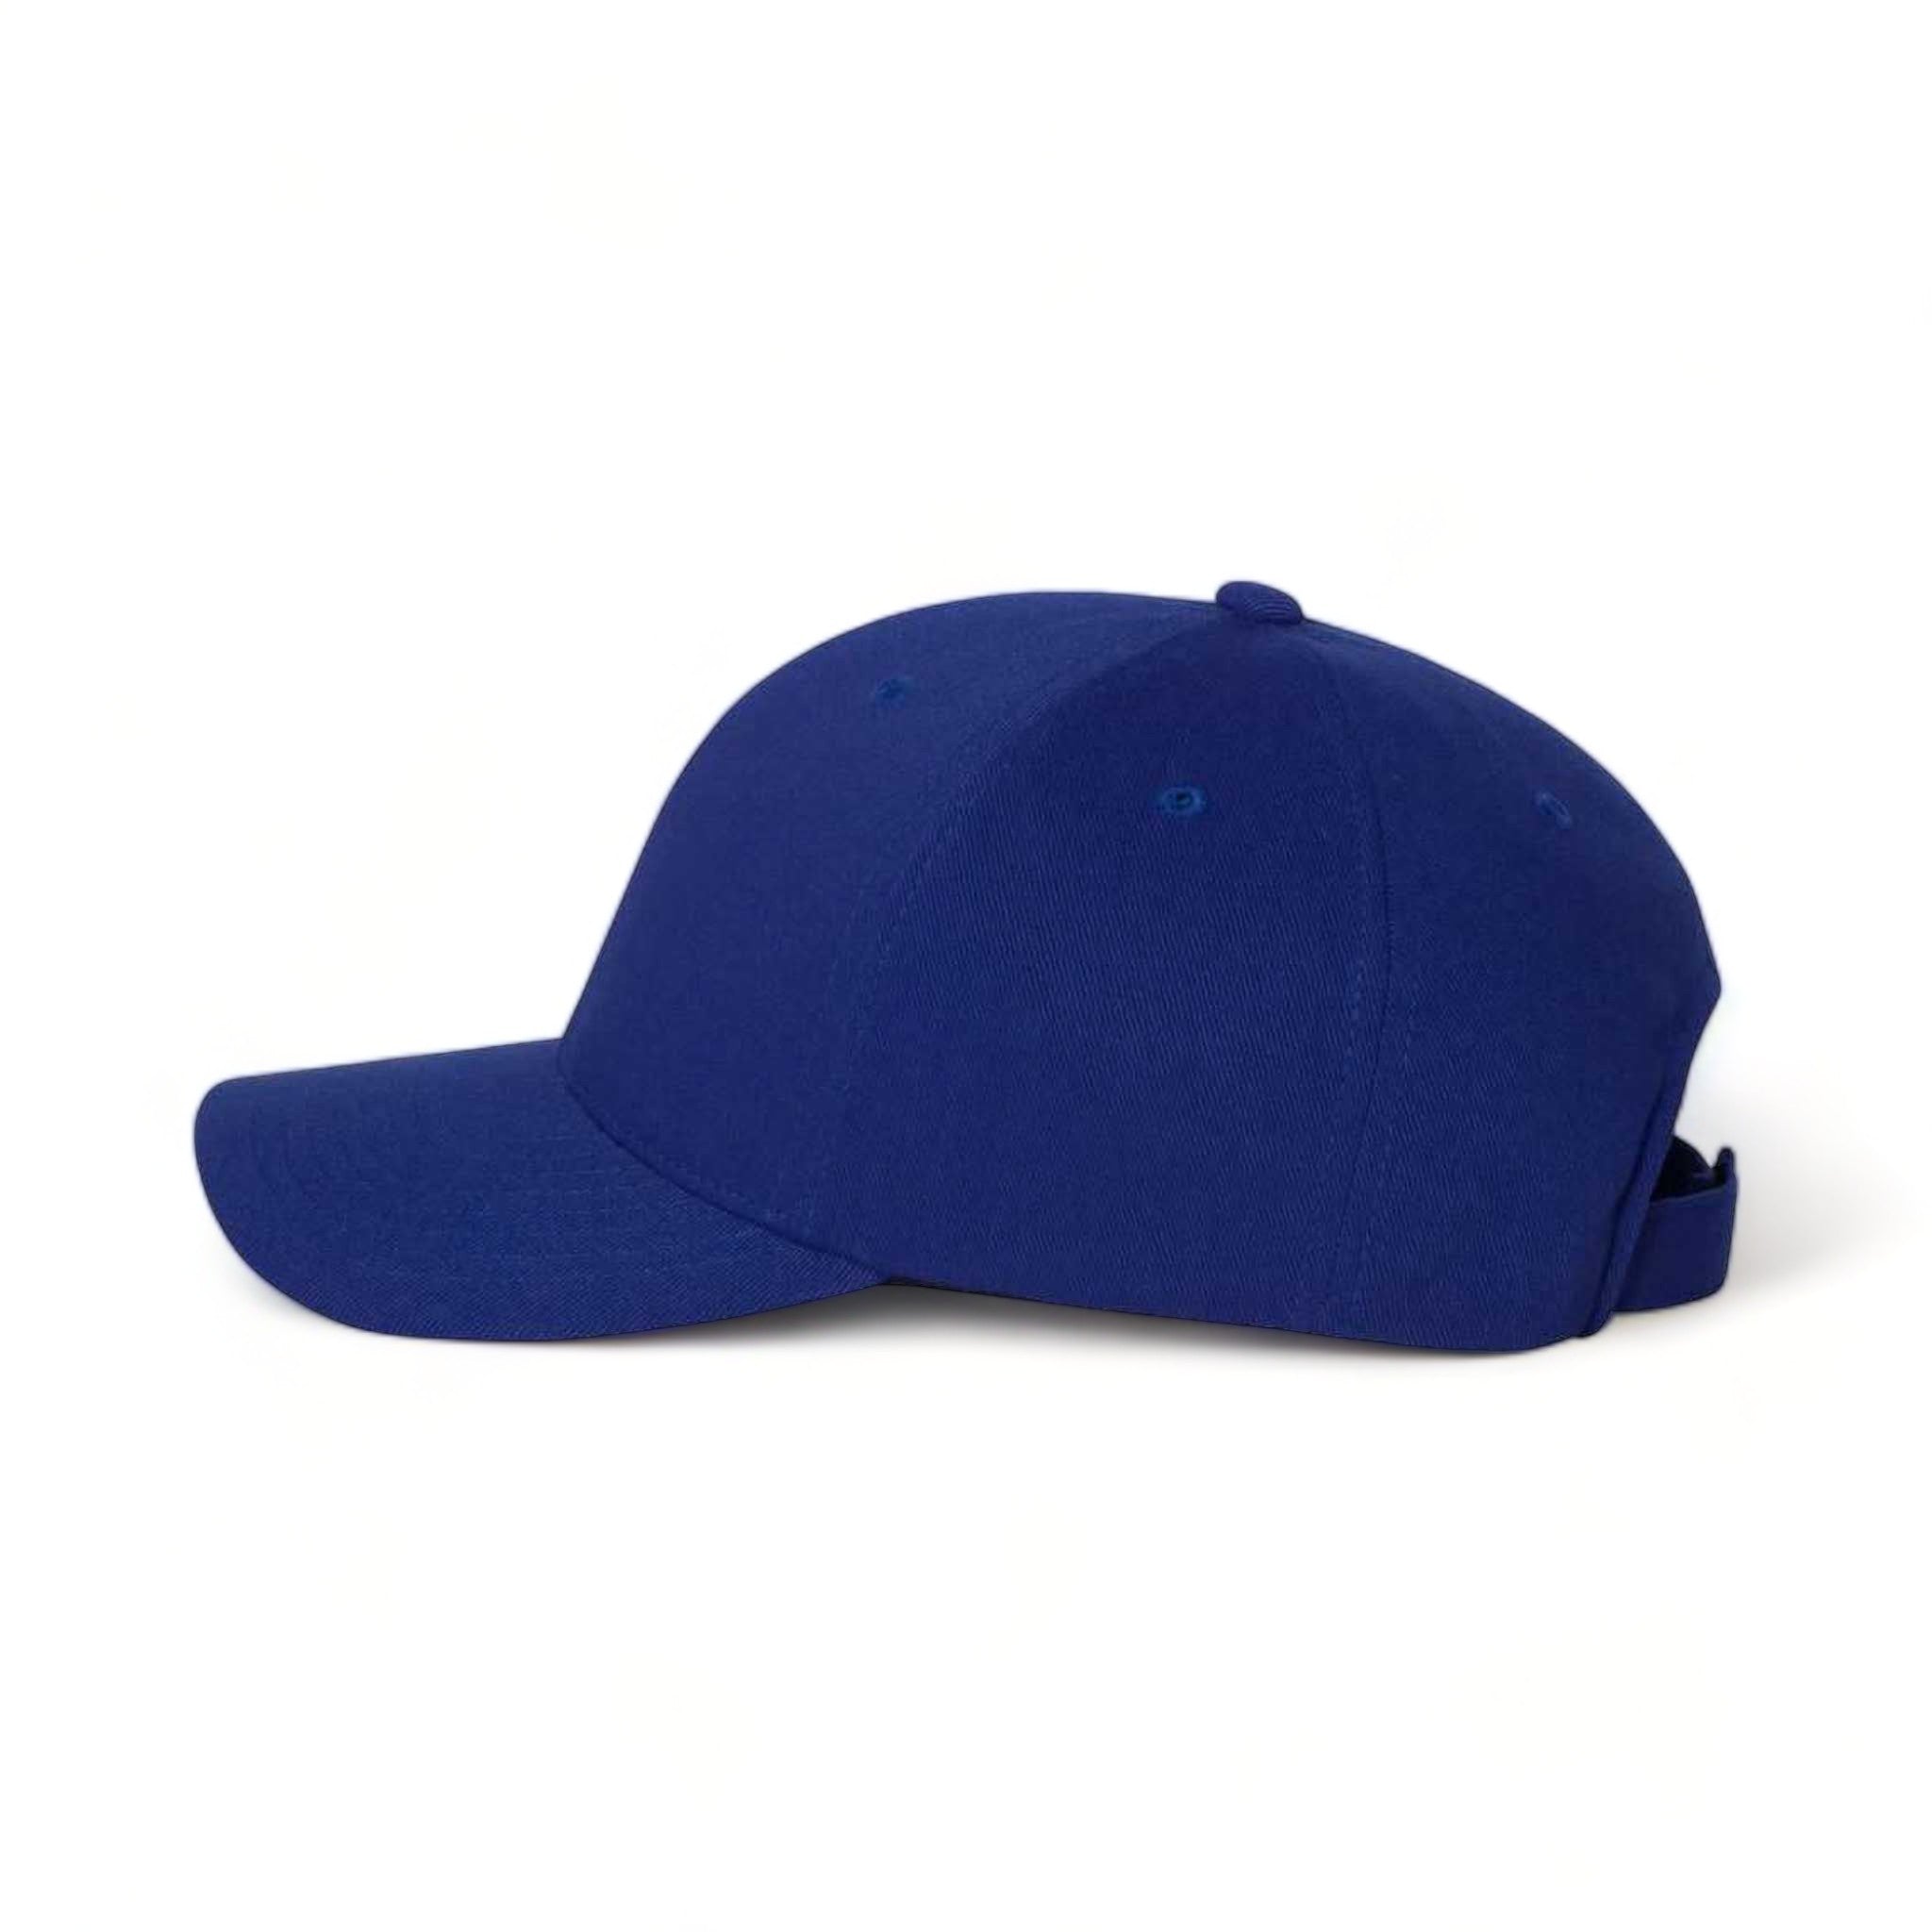 Side view of Flexfit 110C custom hat in royal blue